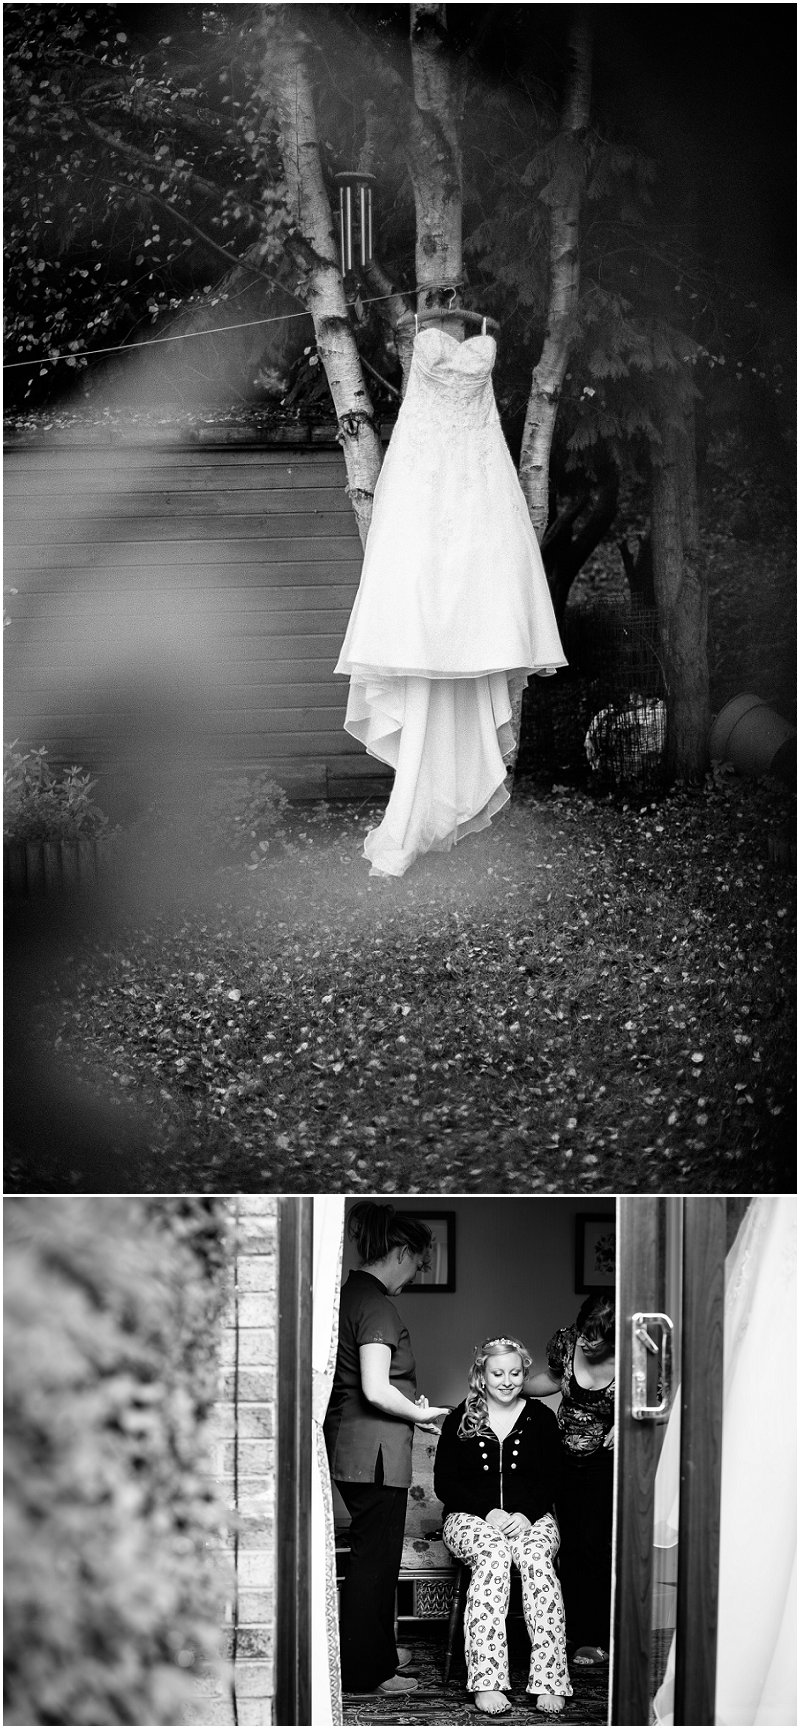 Sefton Park Wedding Photography Liverpool | Award Winning Wedding photographer